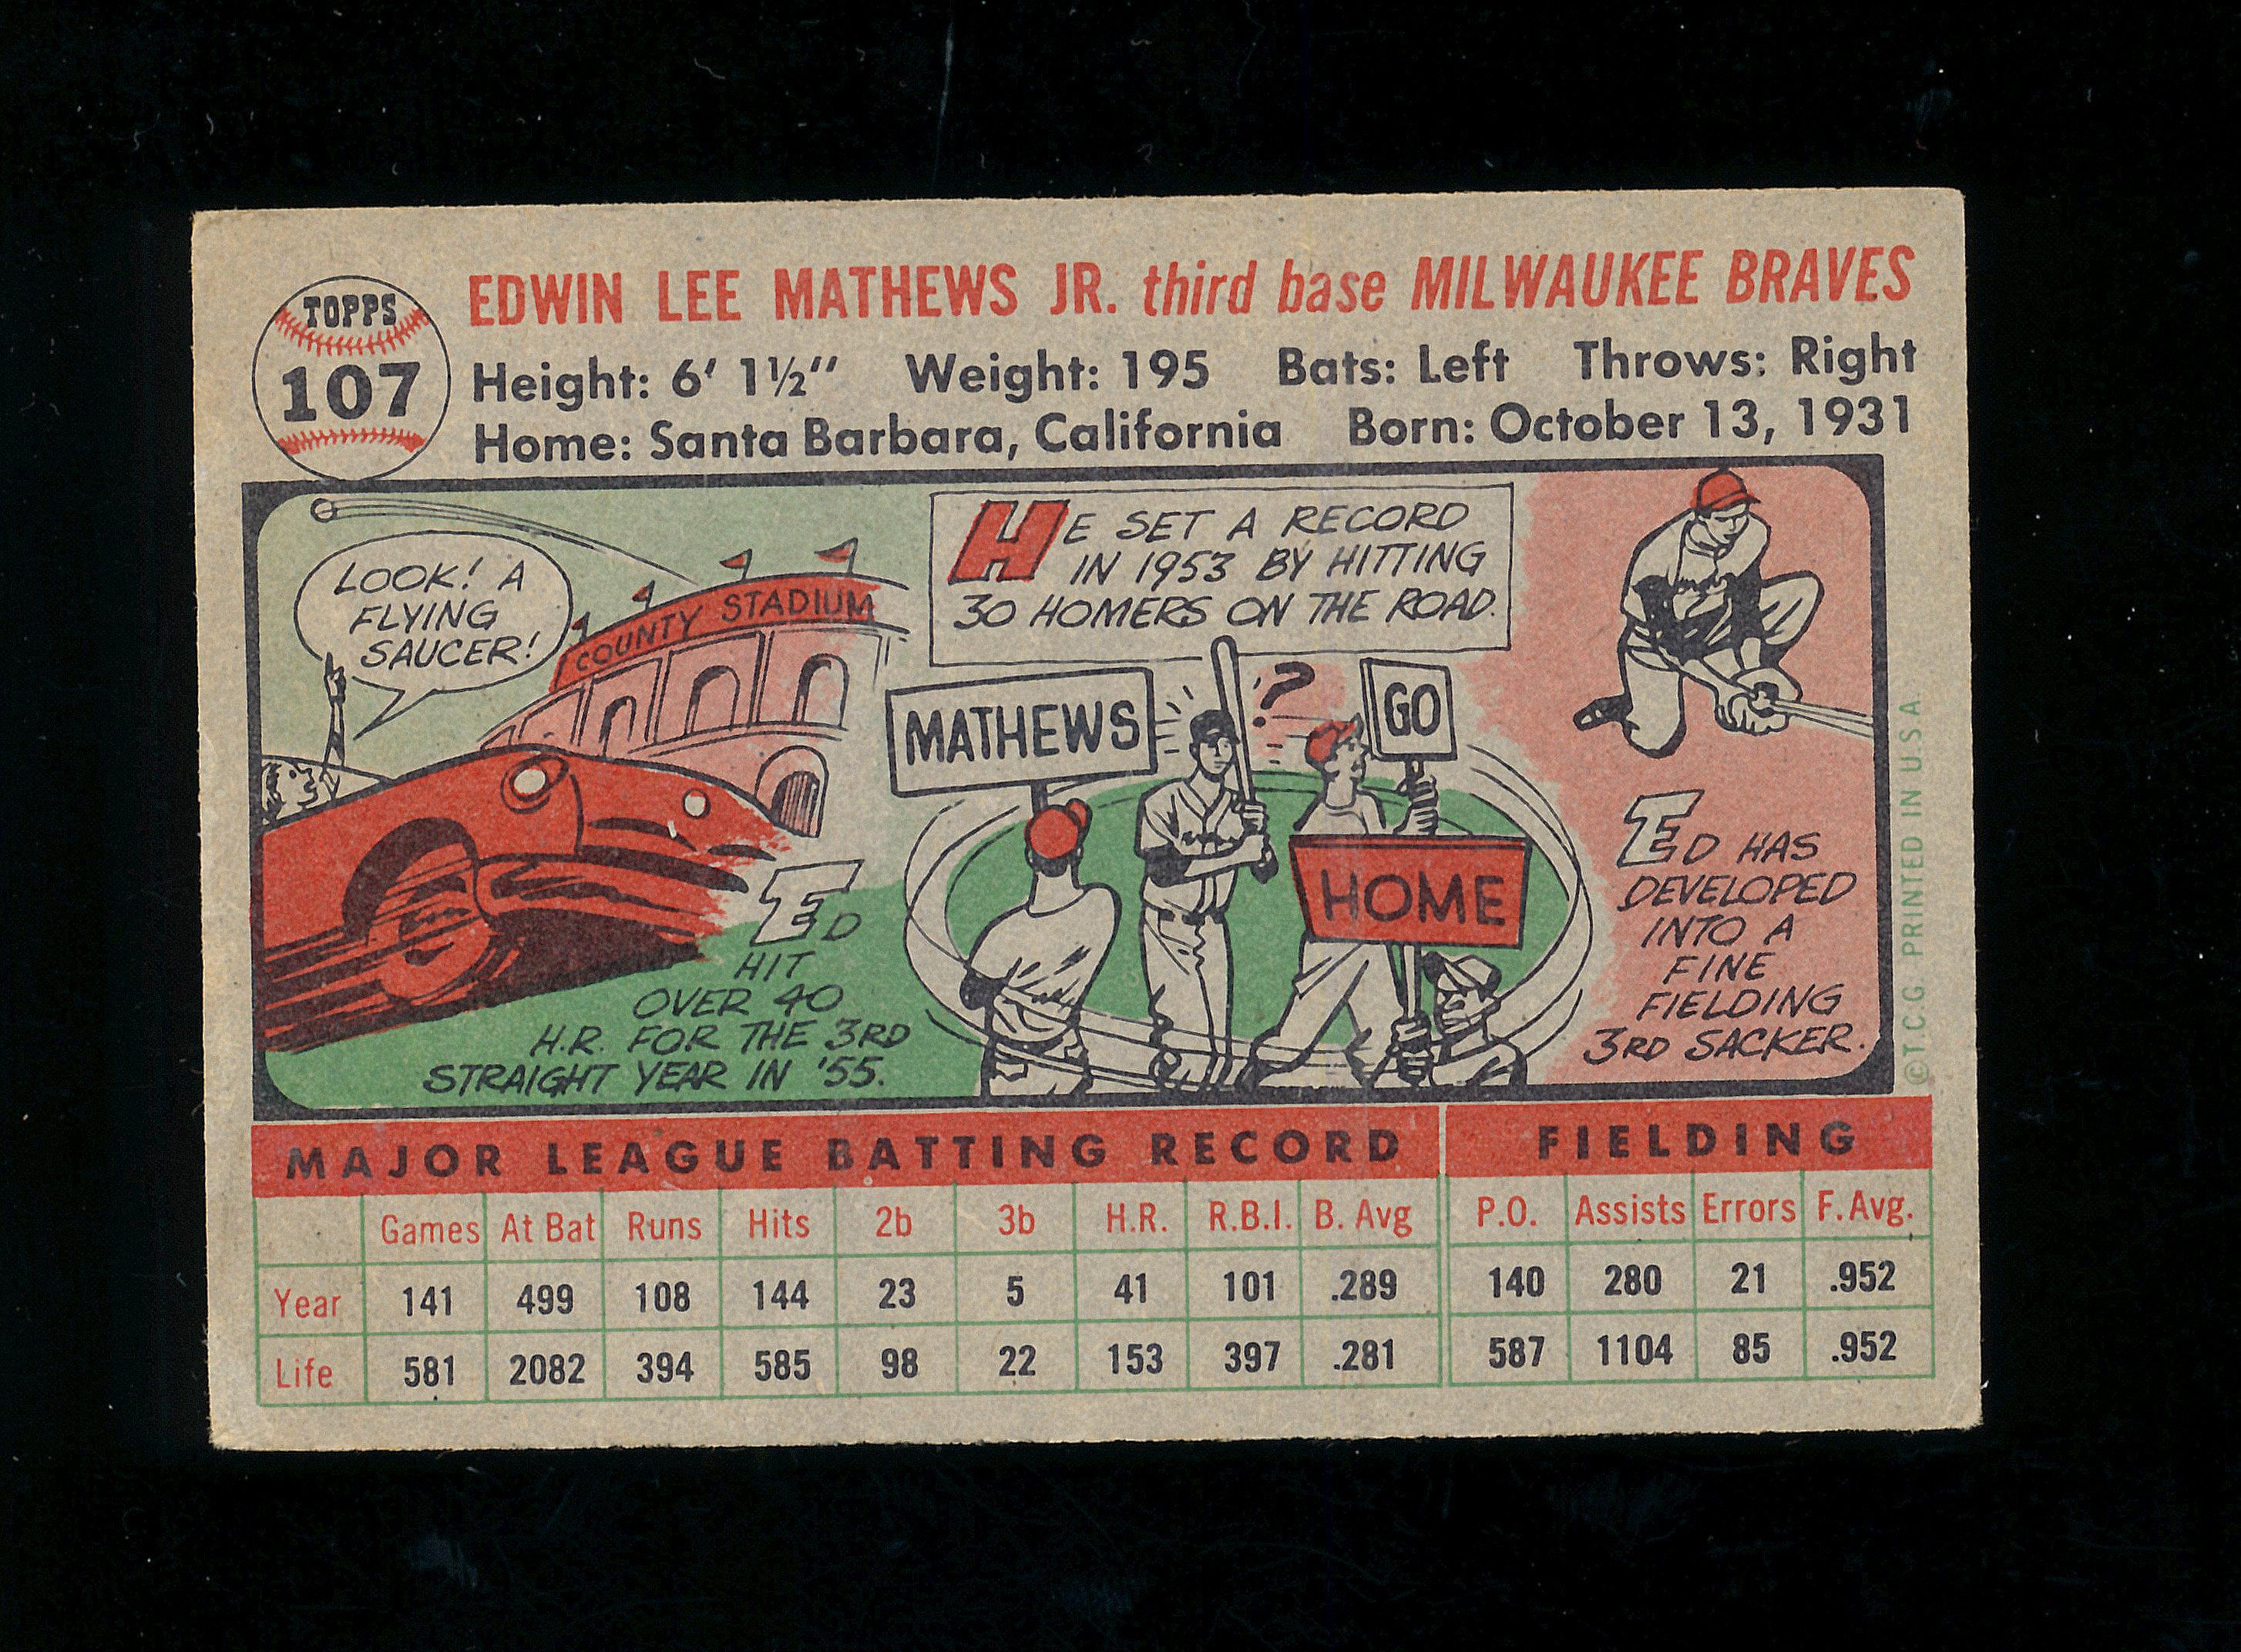 1956 Topps Baseball Card #107 Hall of Famer Eddie Mathews Milwaukee Braves.